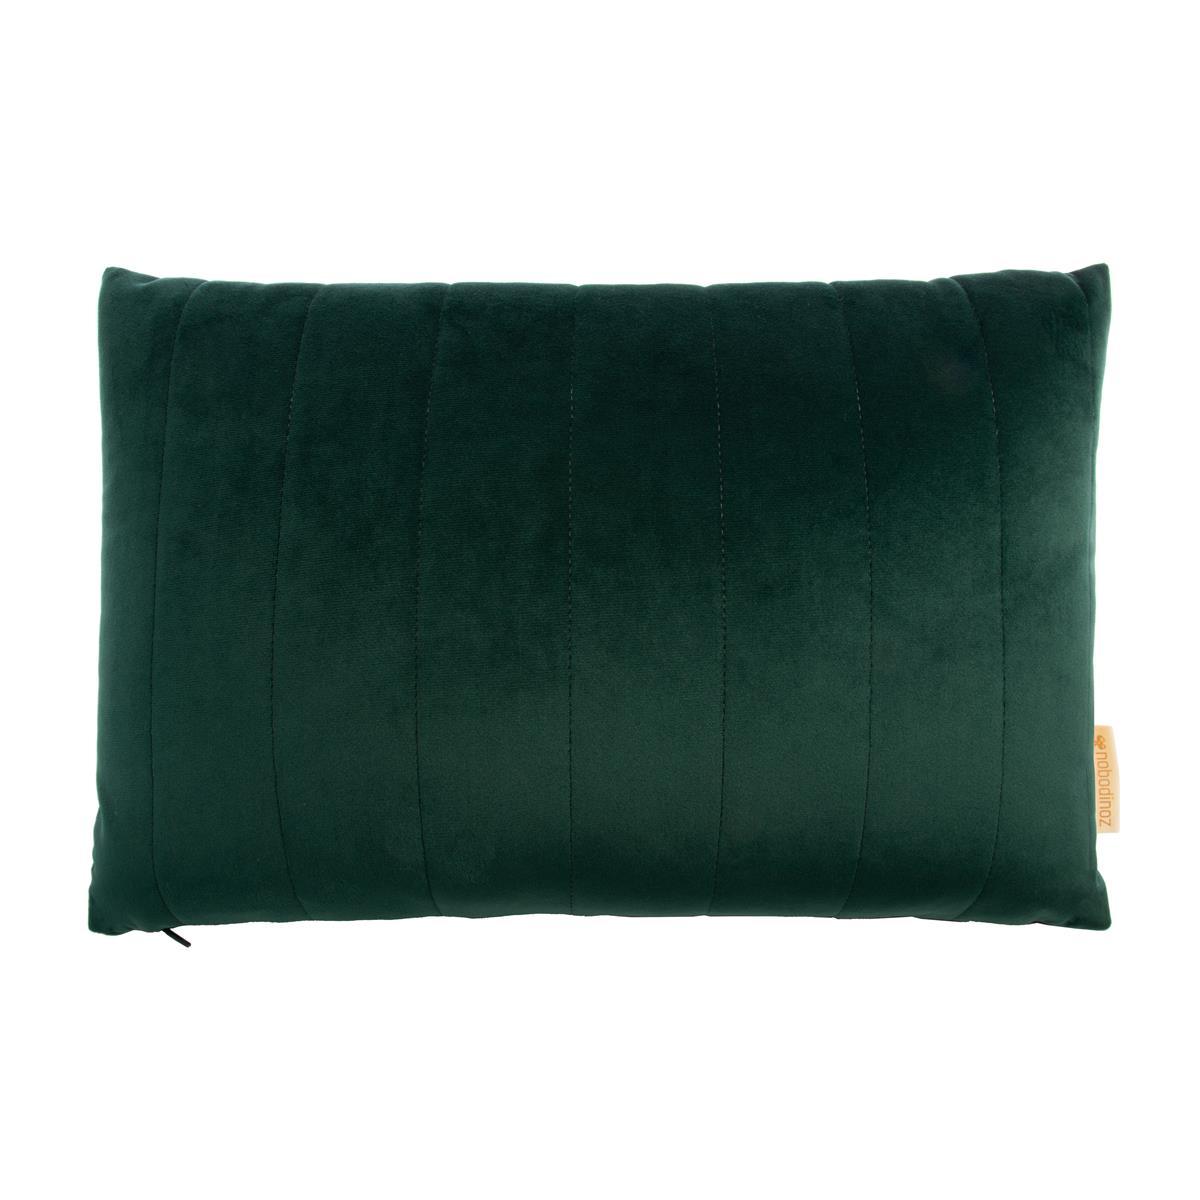 Savanna-akamba-velvet-cushion-jungle-green-nobodinoz-€29.95